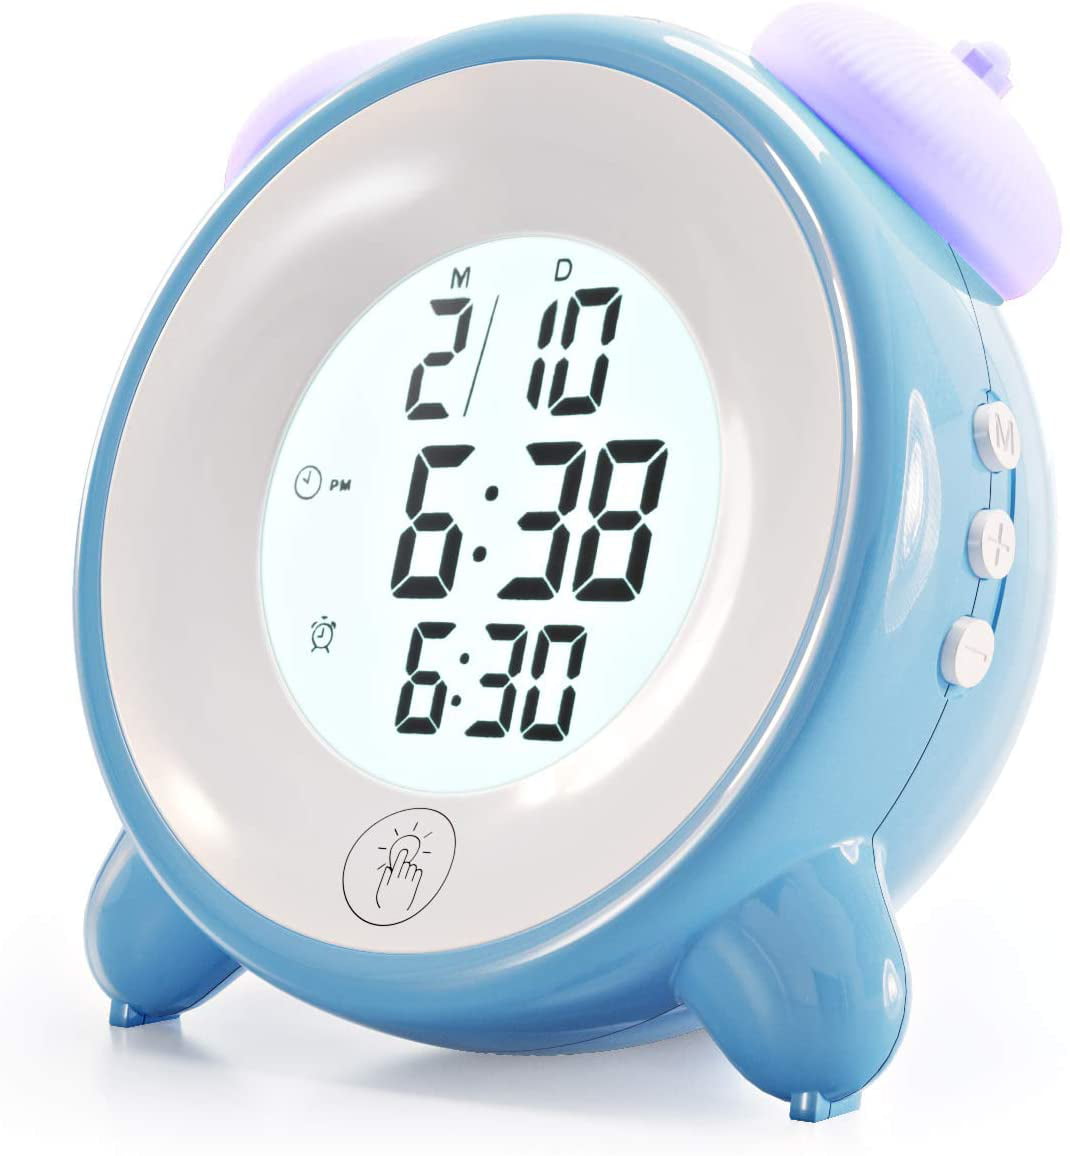 7 Color Changing LED Digital Alarm Clock Snooze Bedroom Decor For Kids Gifts US 